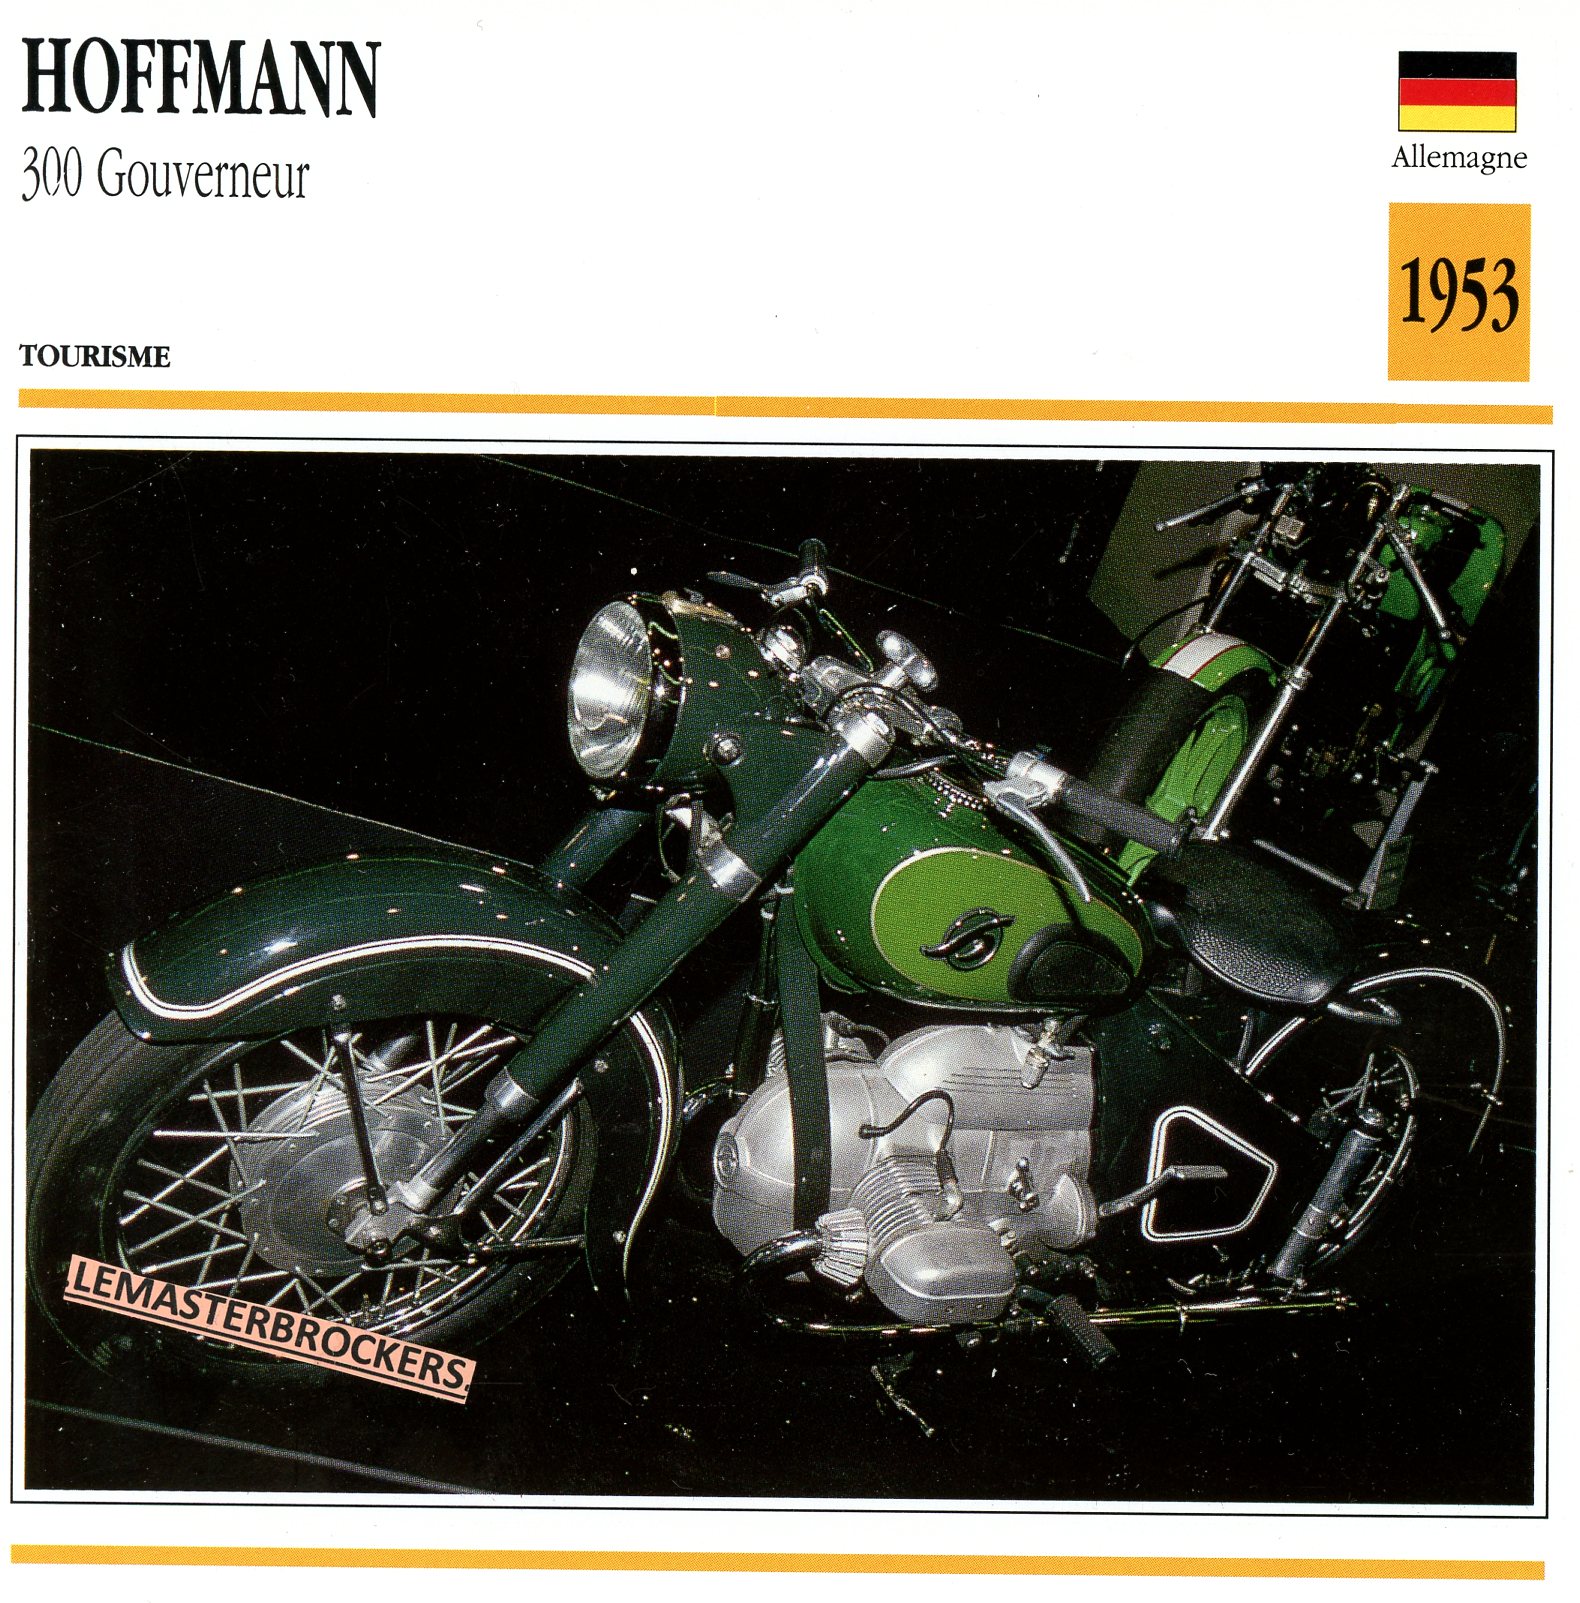 HOFFMANN-GOUVERNEUR-1953-FICHE-MOTO-ATLAS-lemasterbrockers-CARD-MOTORCYCLE